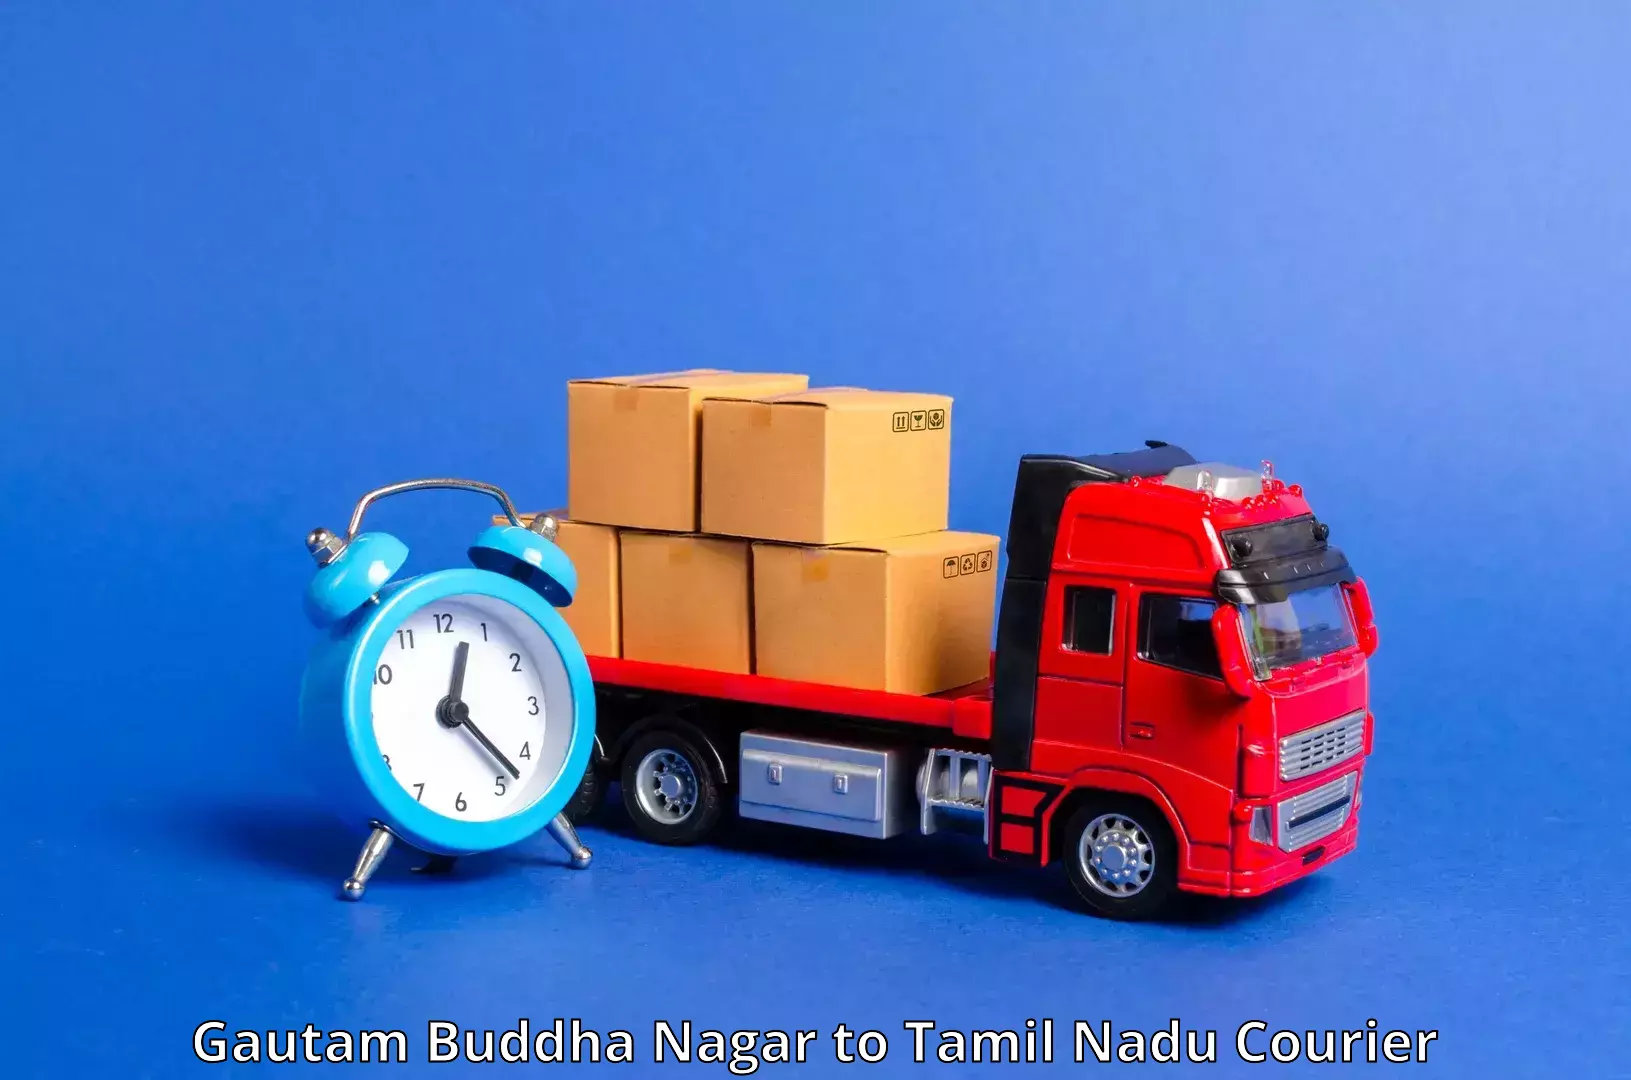 Courier service innovation Gautam Buddha Nagar to Shanmugha Arts Science Technology and Research Academy Thanjavur